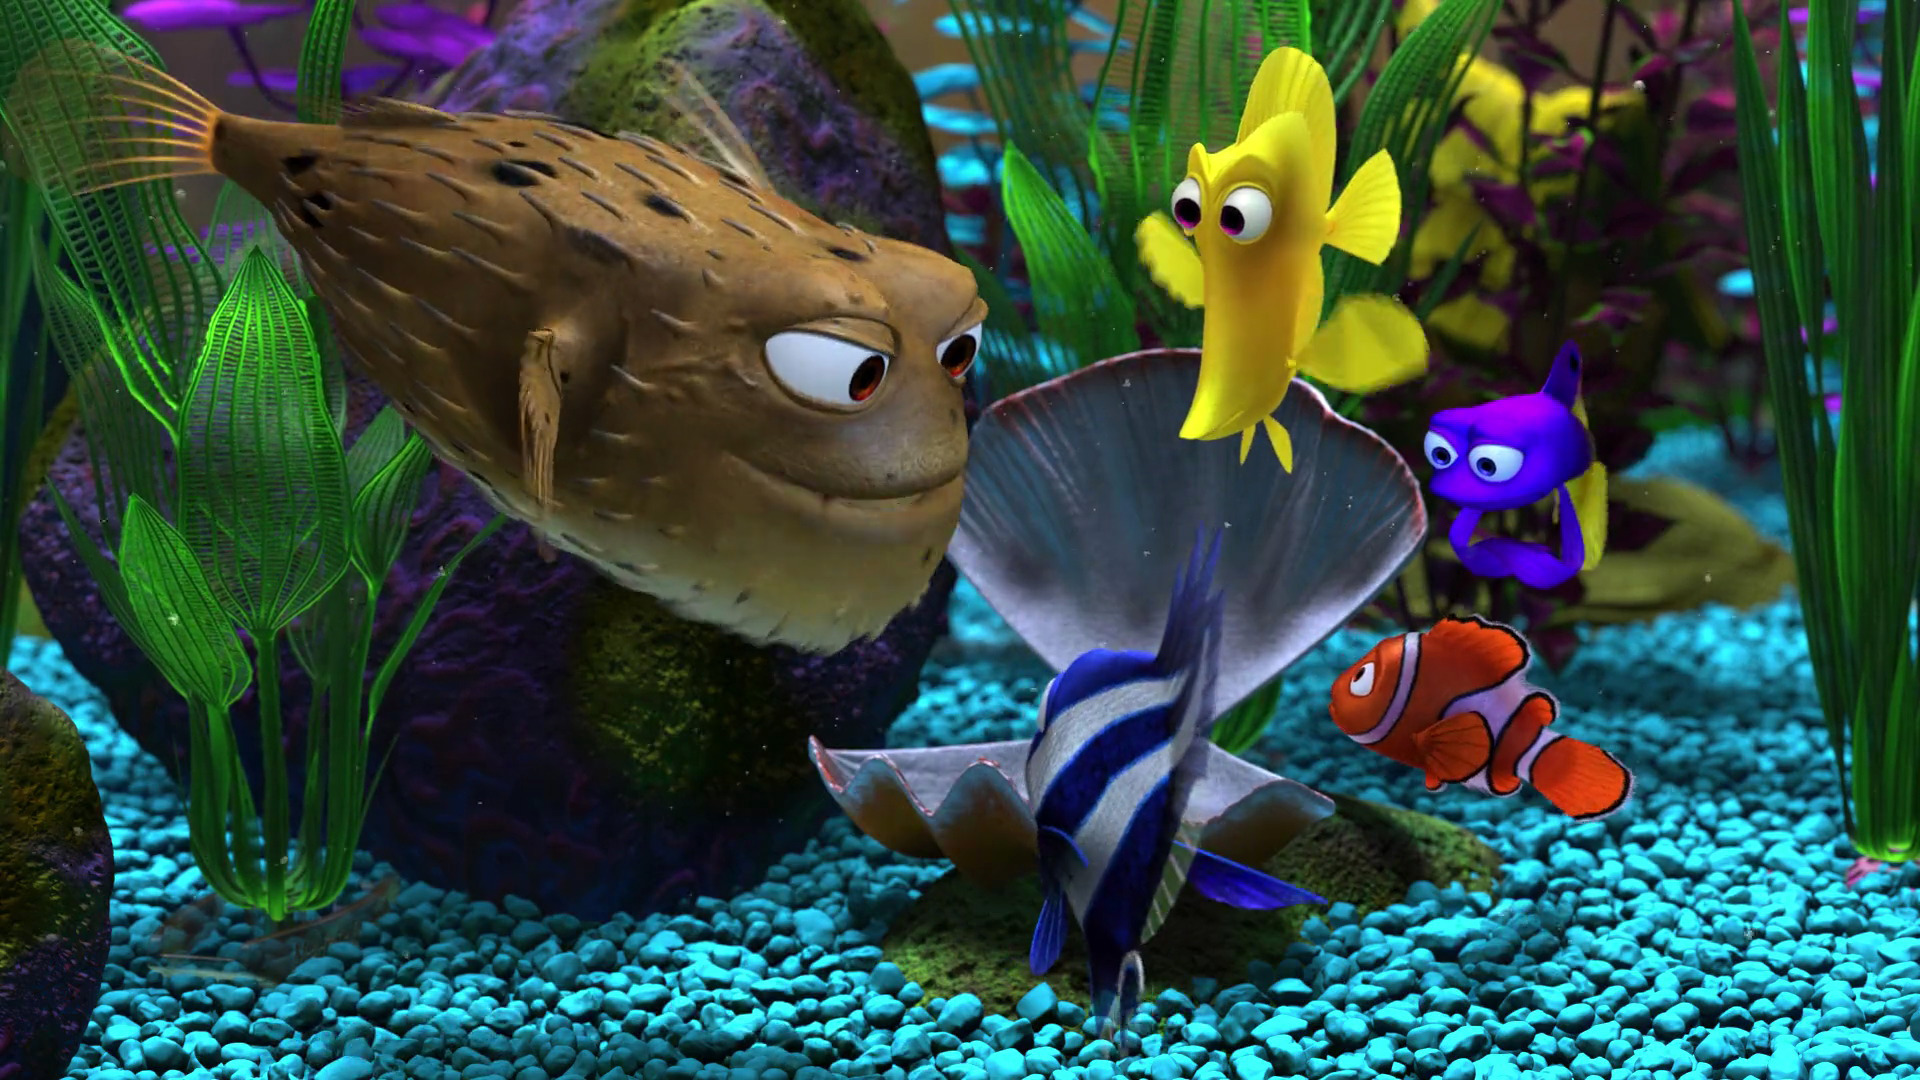 4K Fish Tank- Finding Nemo Aquarium - Finding Dory too 😉 